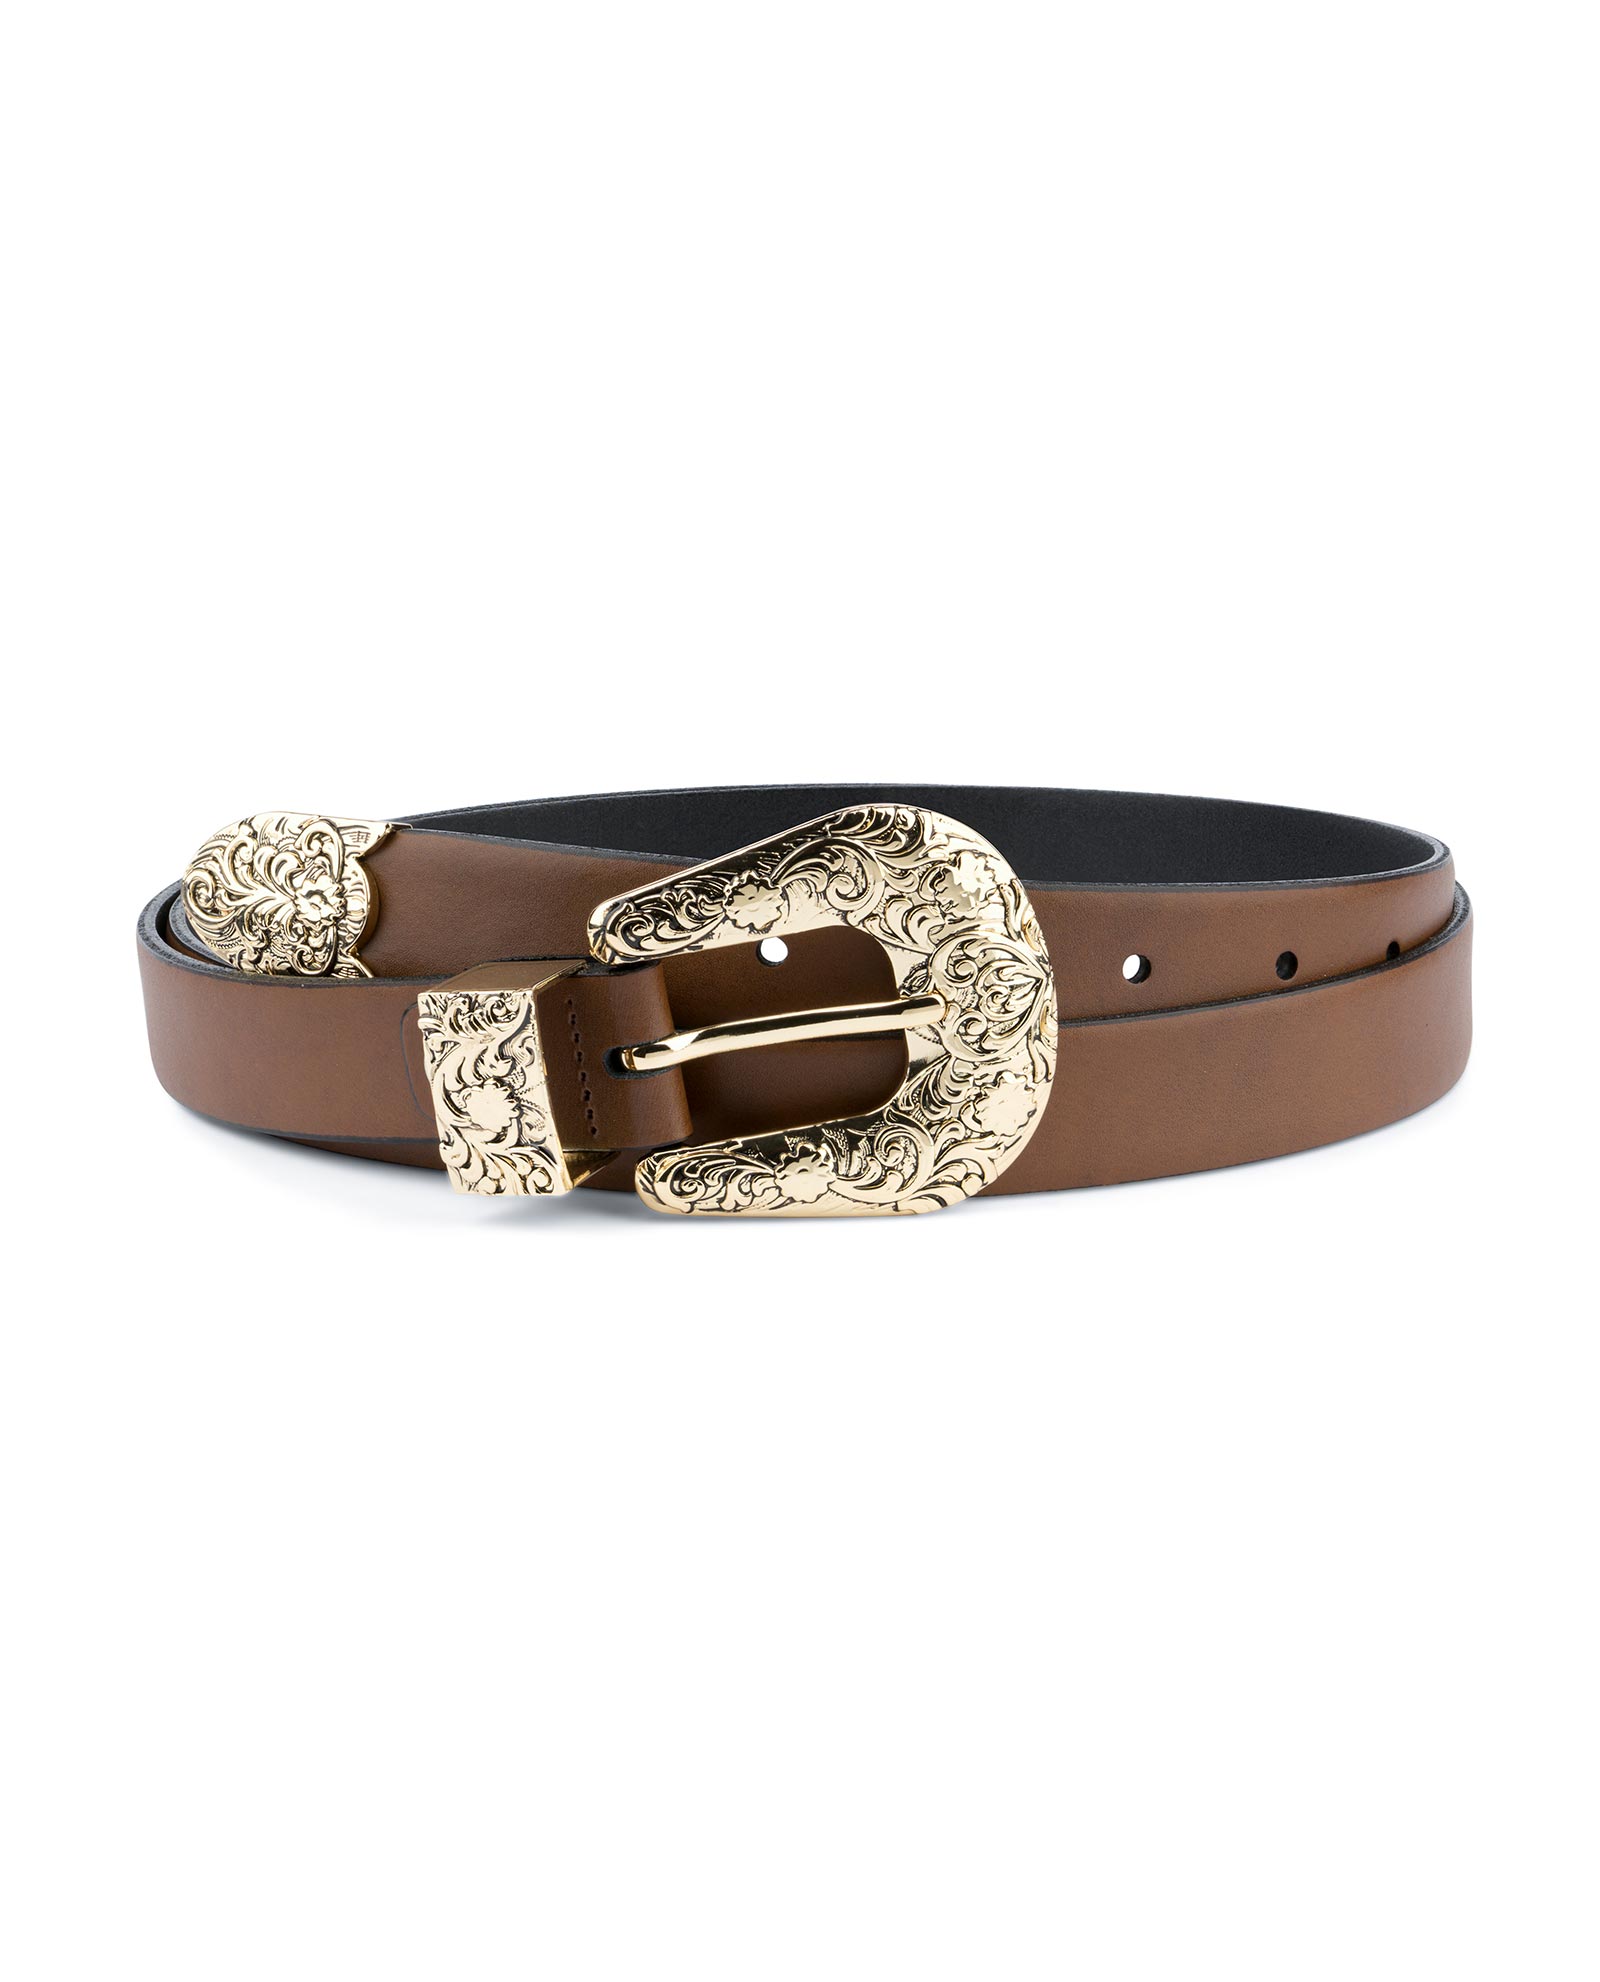 Western belts for women Brown belt gold buckle Cowgirl 100% Genuine Tan leather | eBay